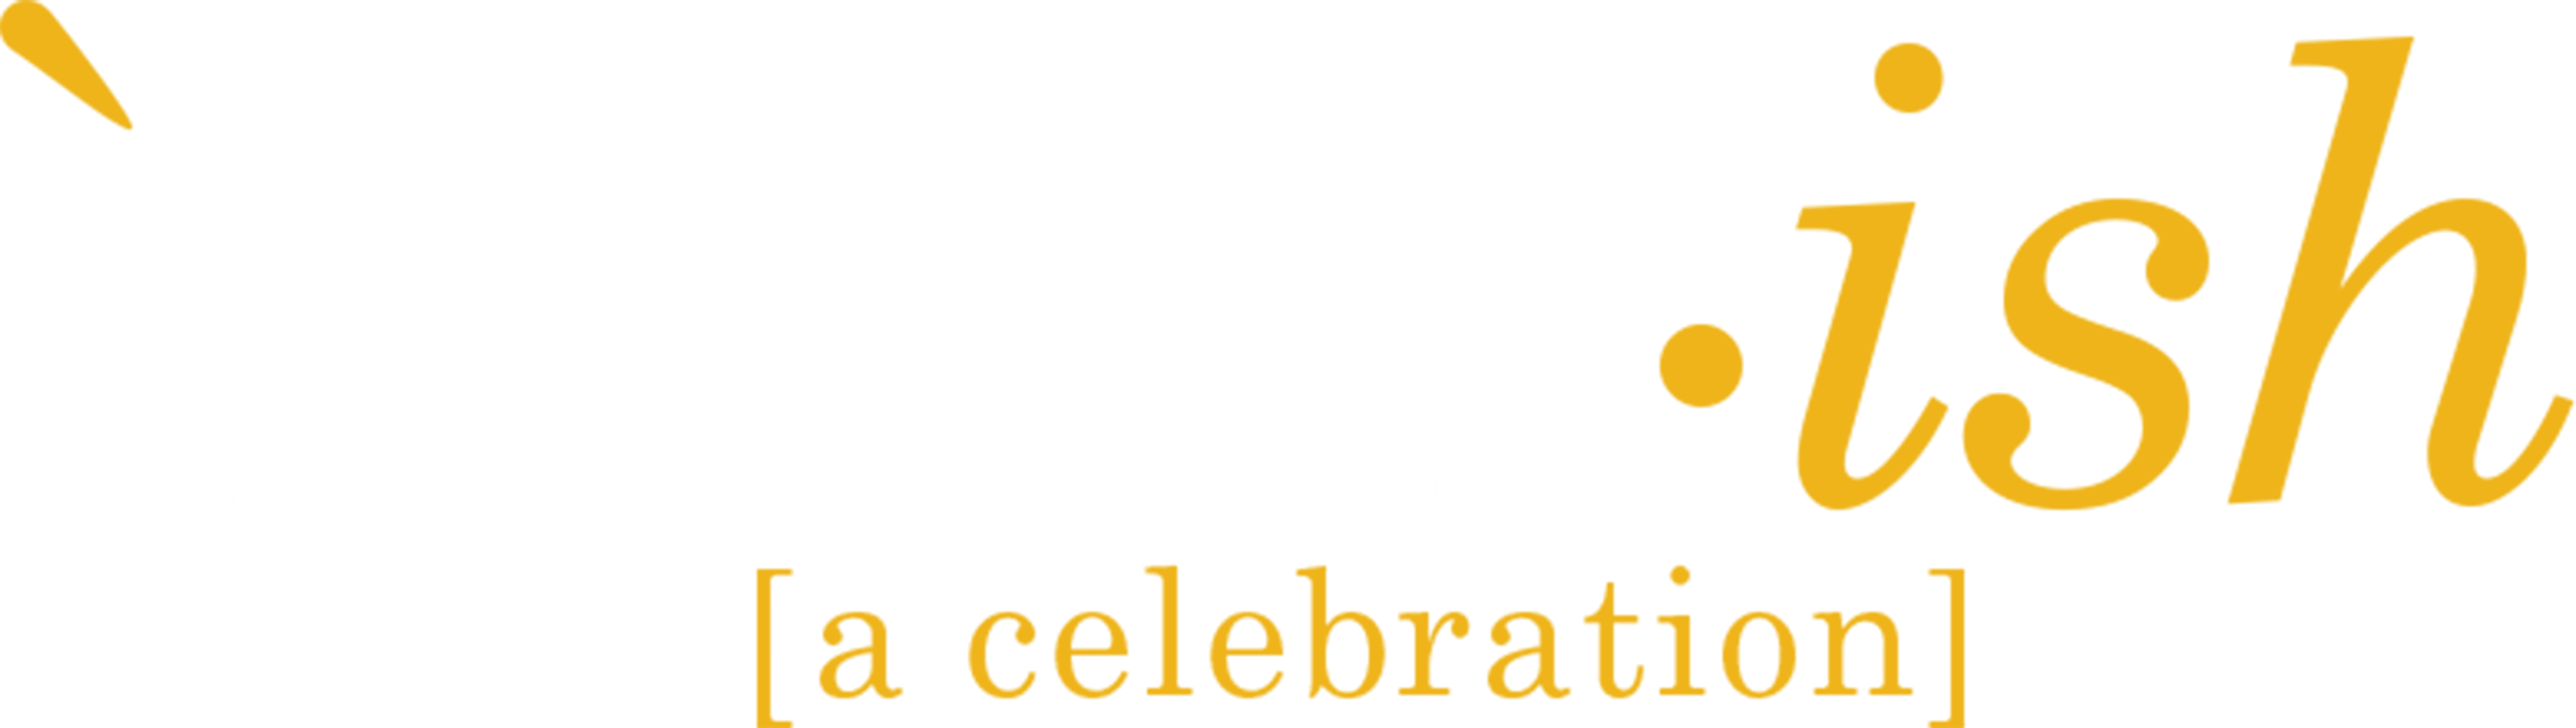 black-ish: A Celebration – An ABC News Special logo